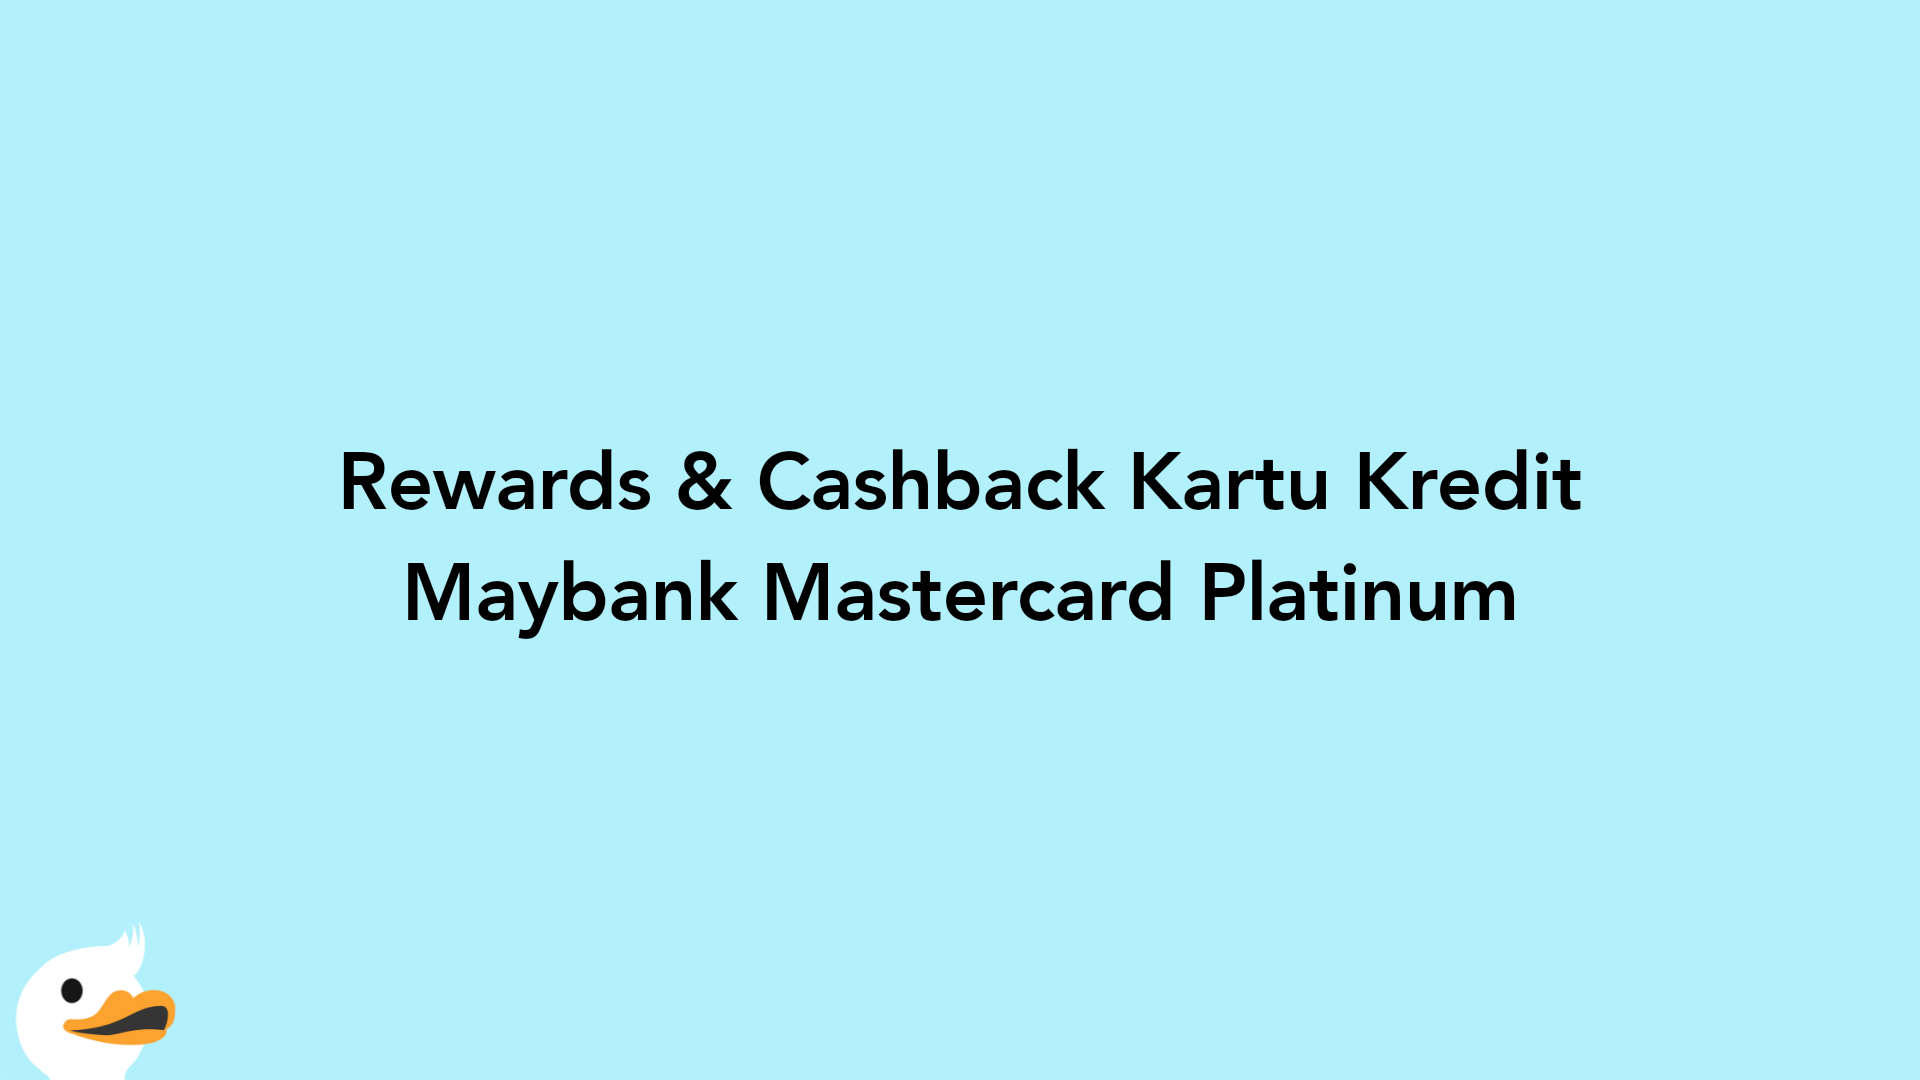 Rewards & Cashback Kartu Kredit Maybank Mastercard Platinum